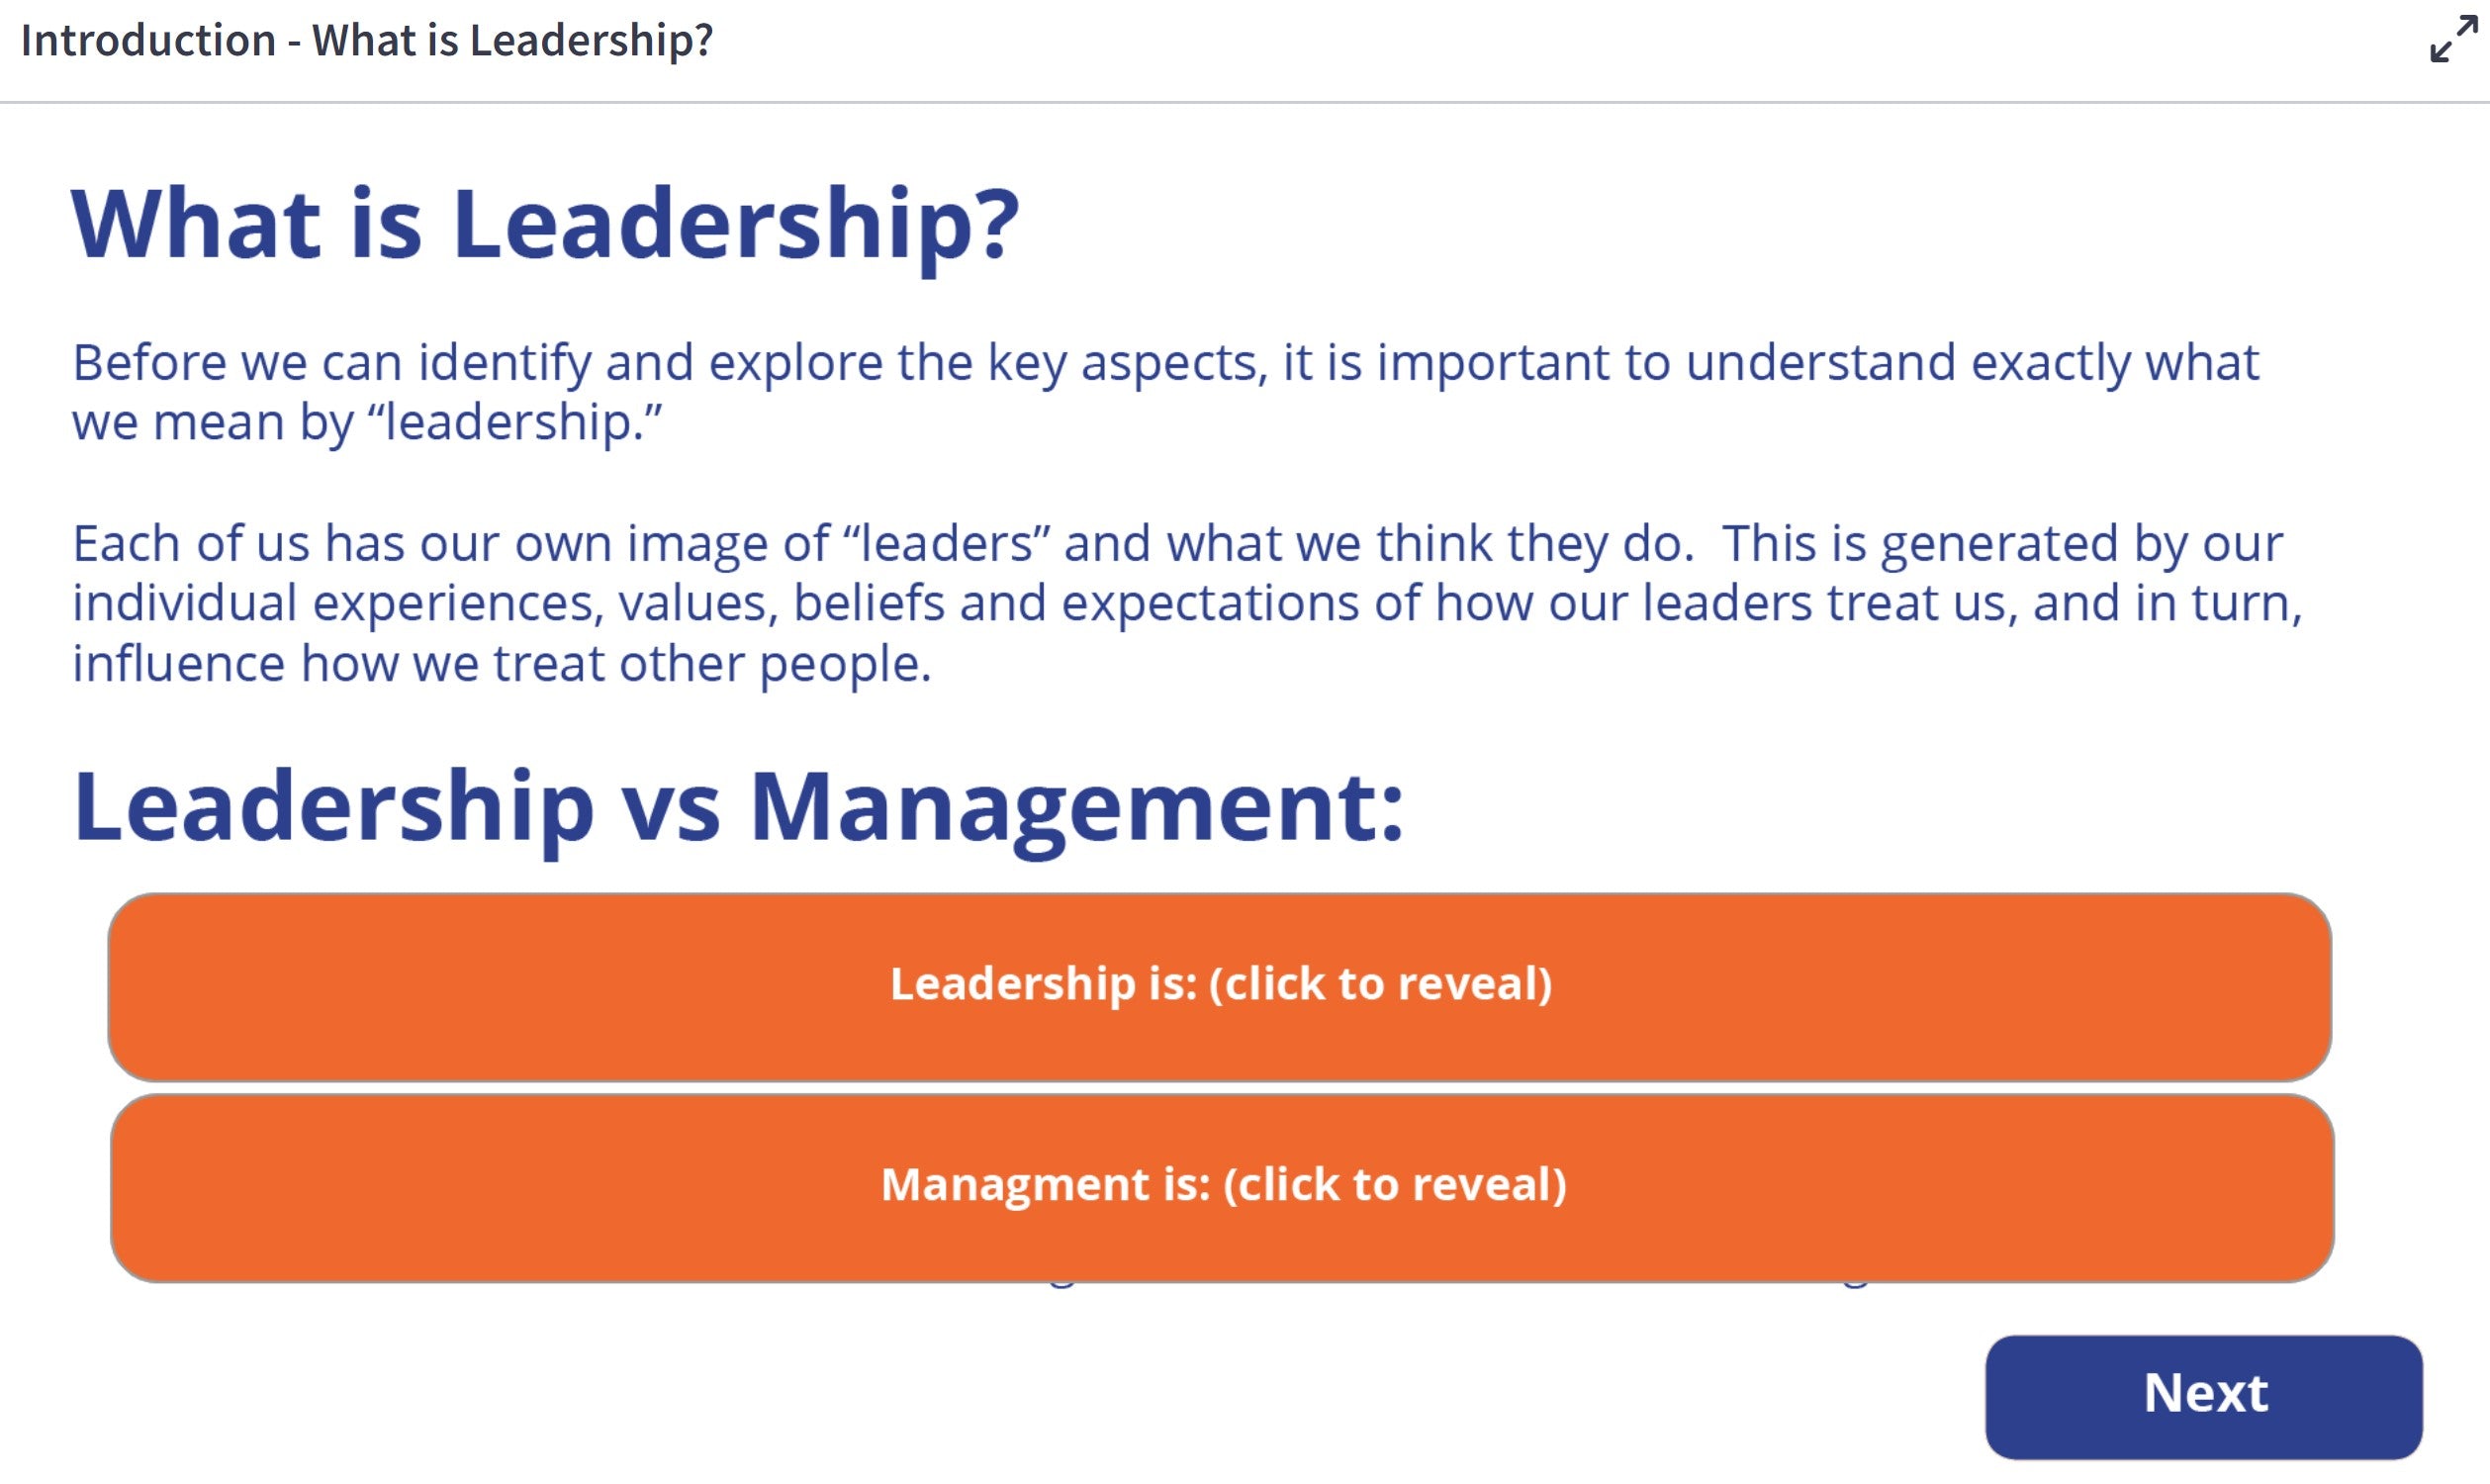 An Introduction to Leadership Development Skills